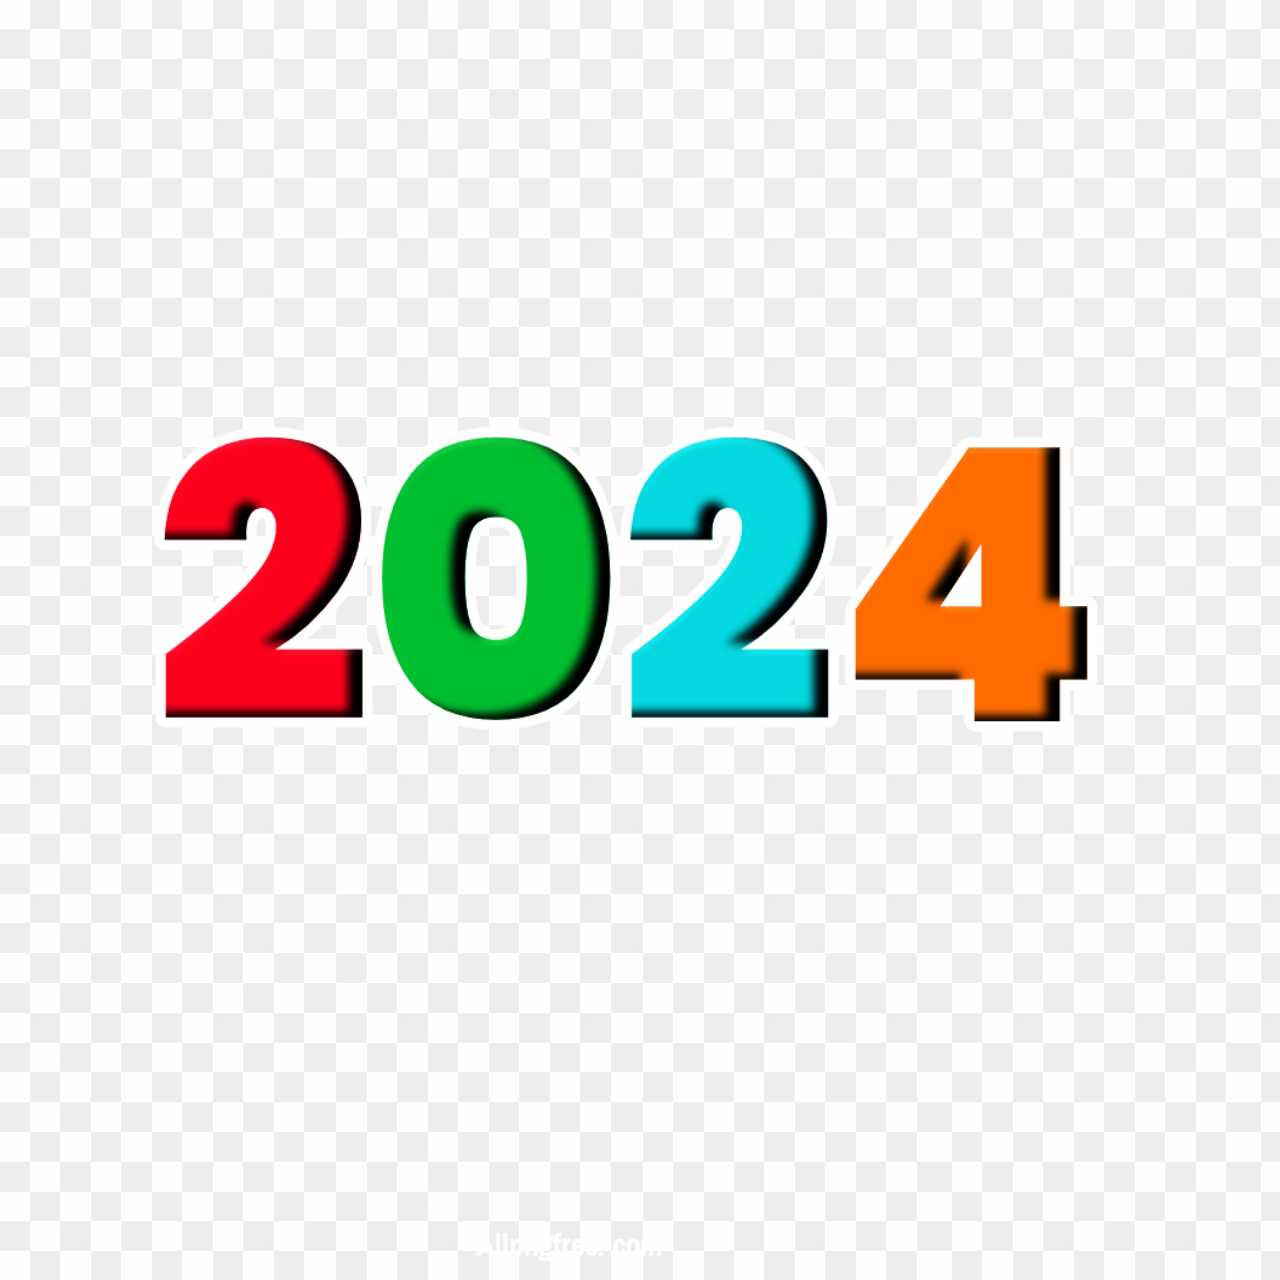 2024 number text PNG transparent images download